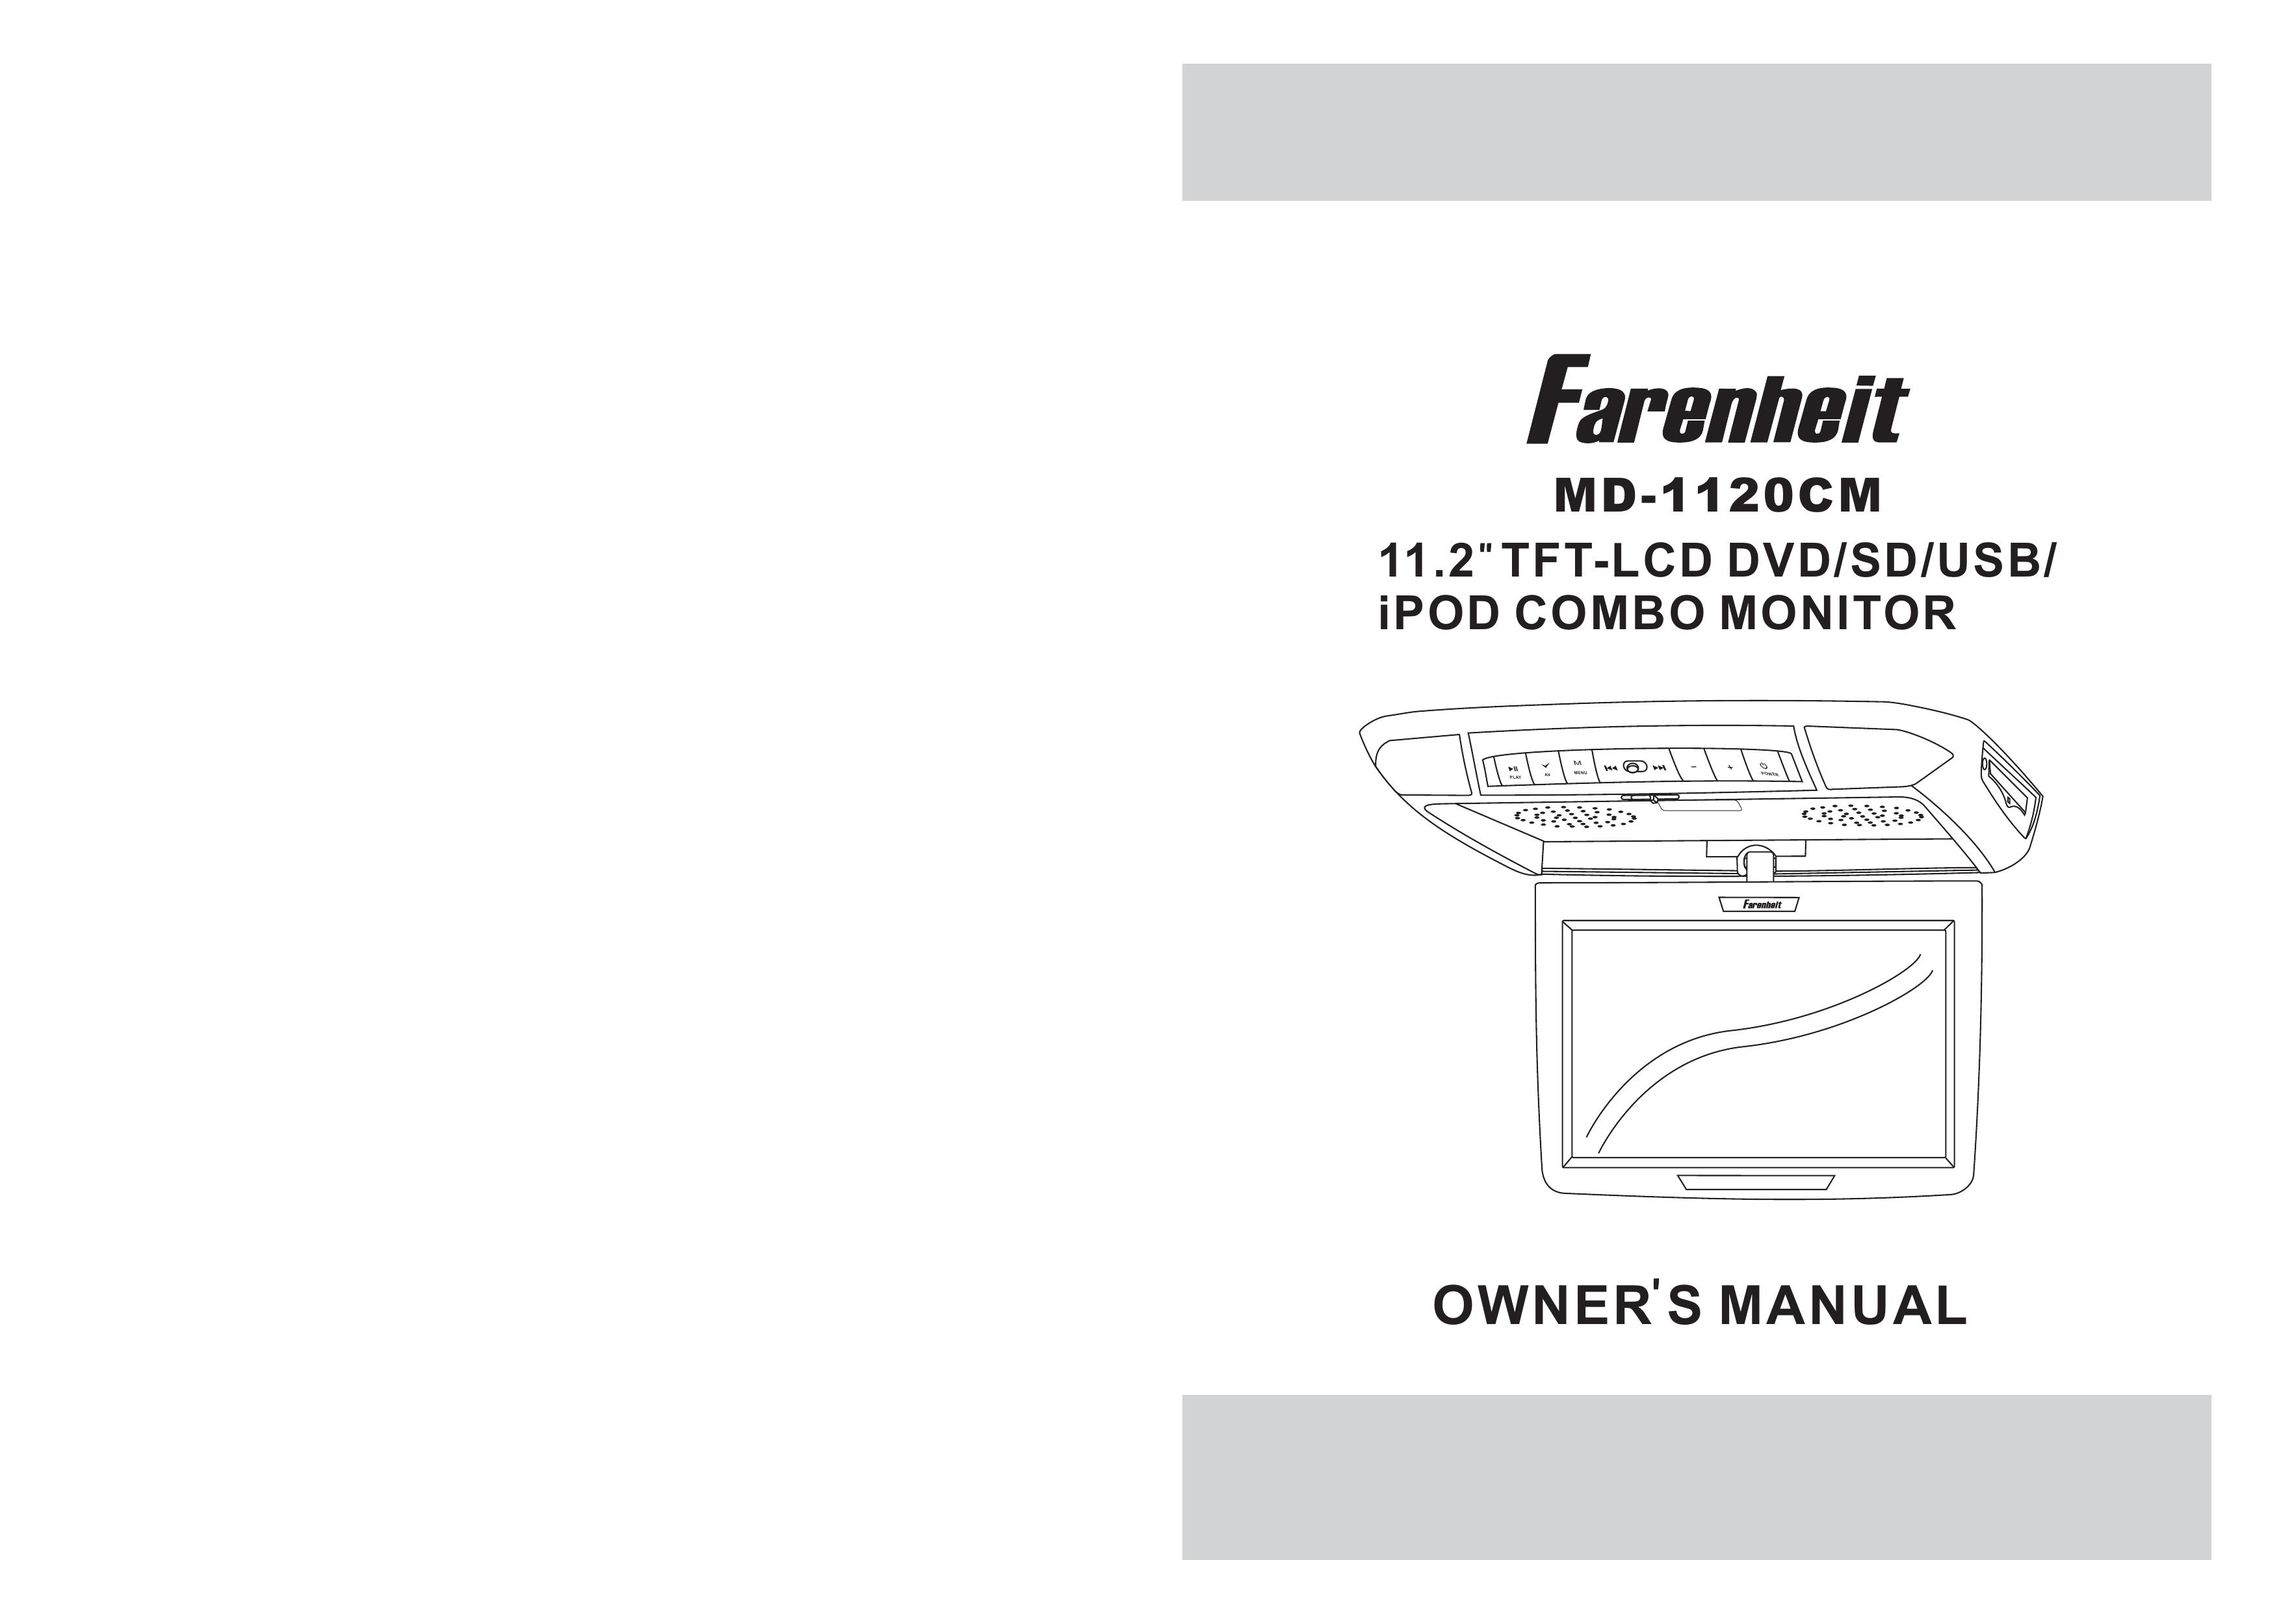 Farenheit Technologies MD-1120CM DVD Player User Manual